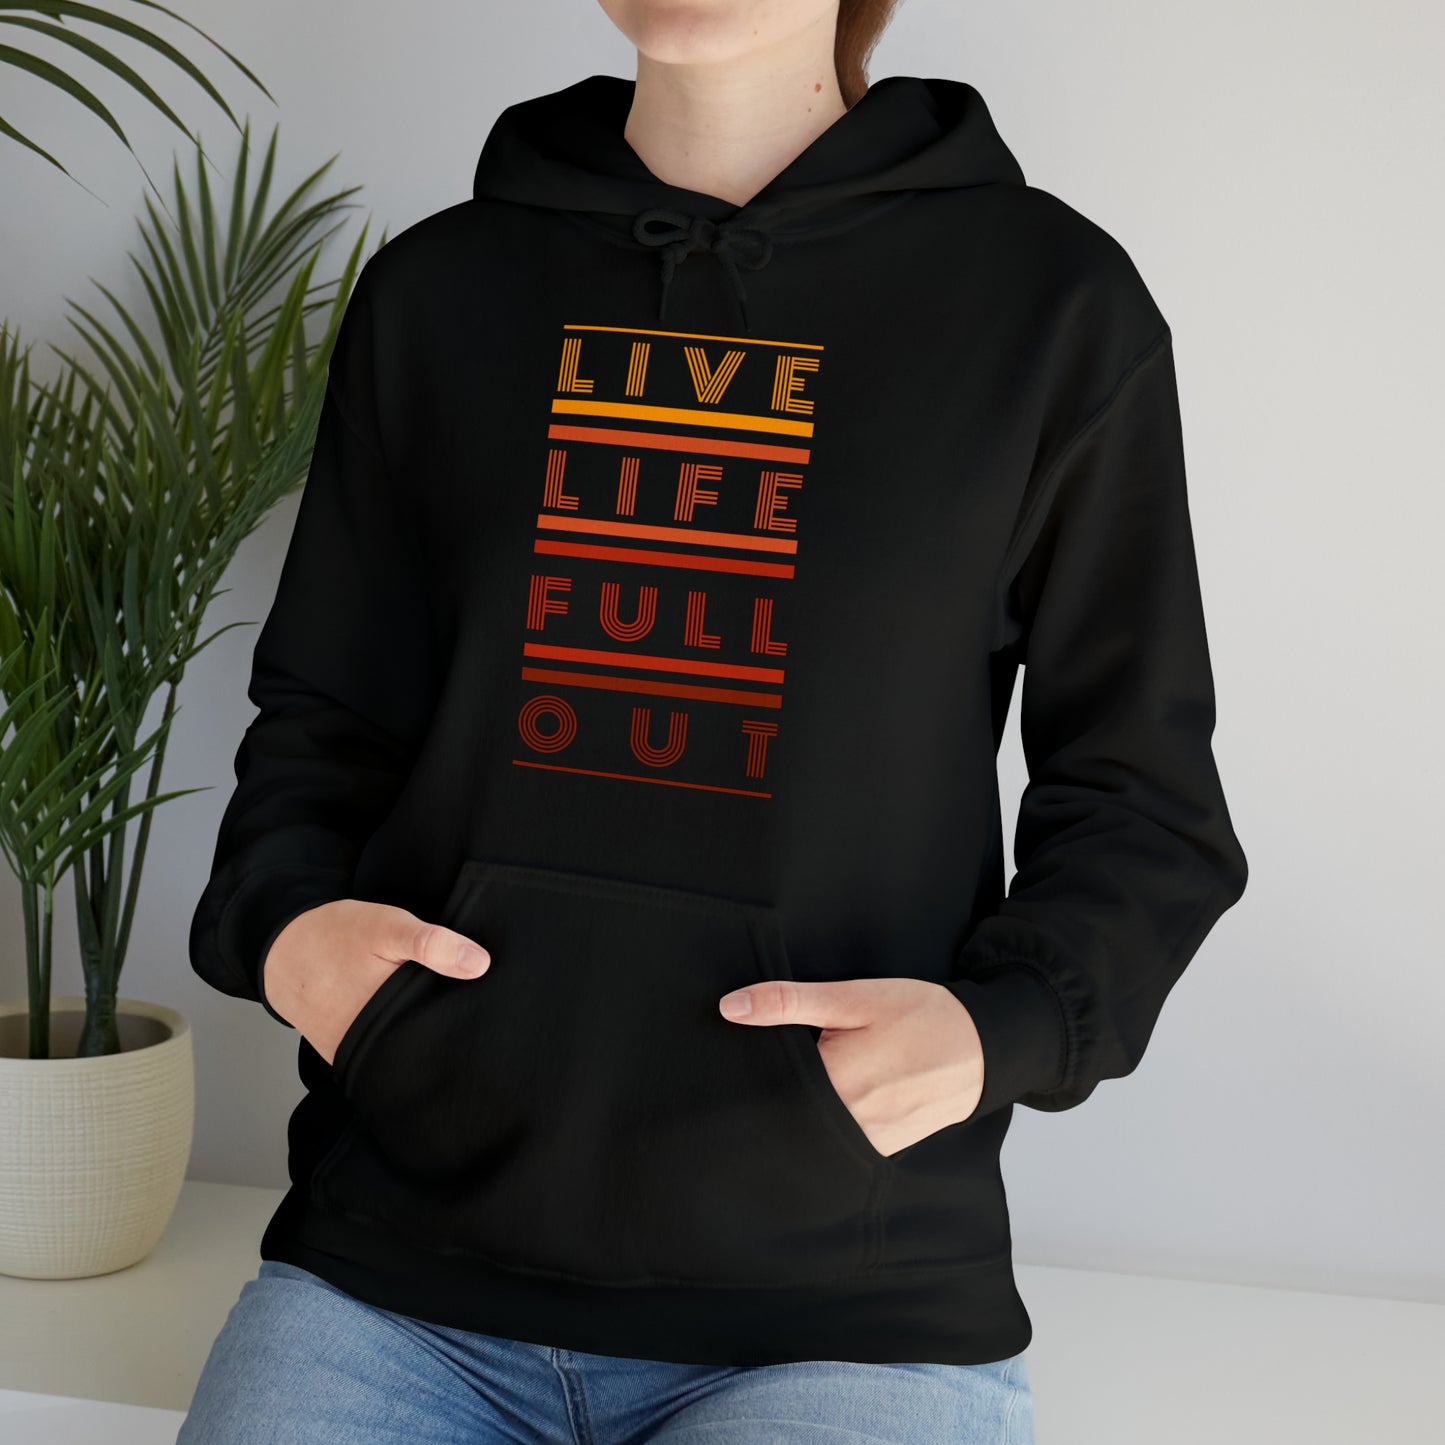 LLFO! Unisex Hooded Sweatshirt